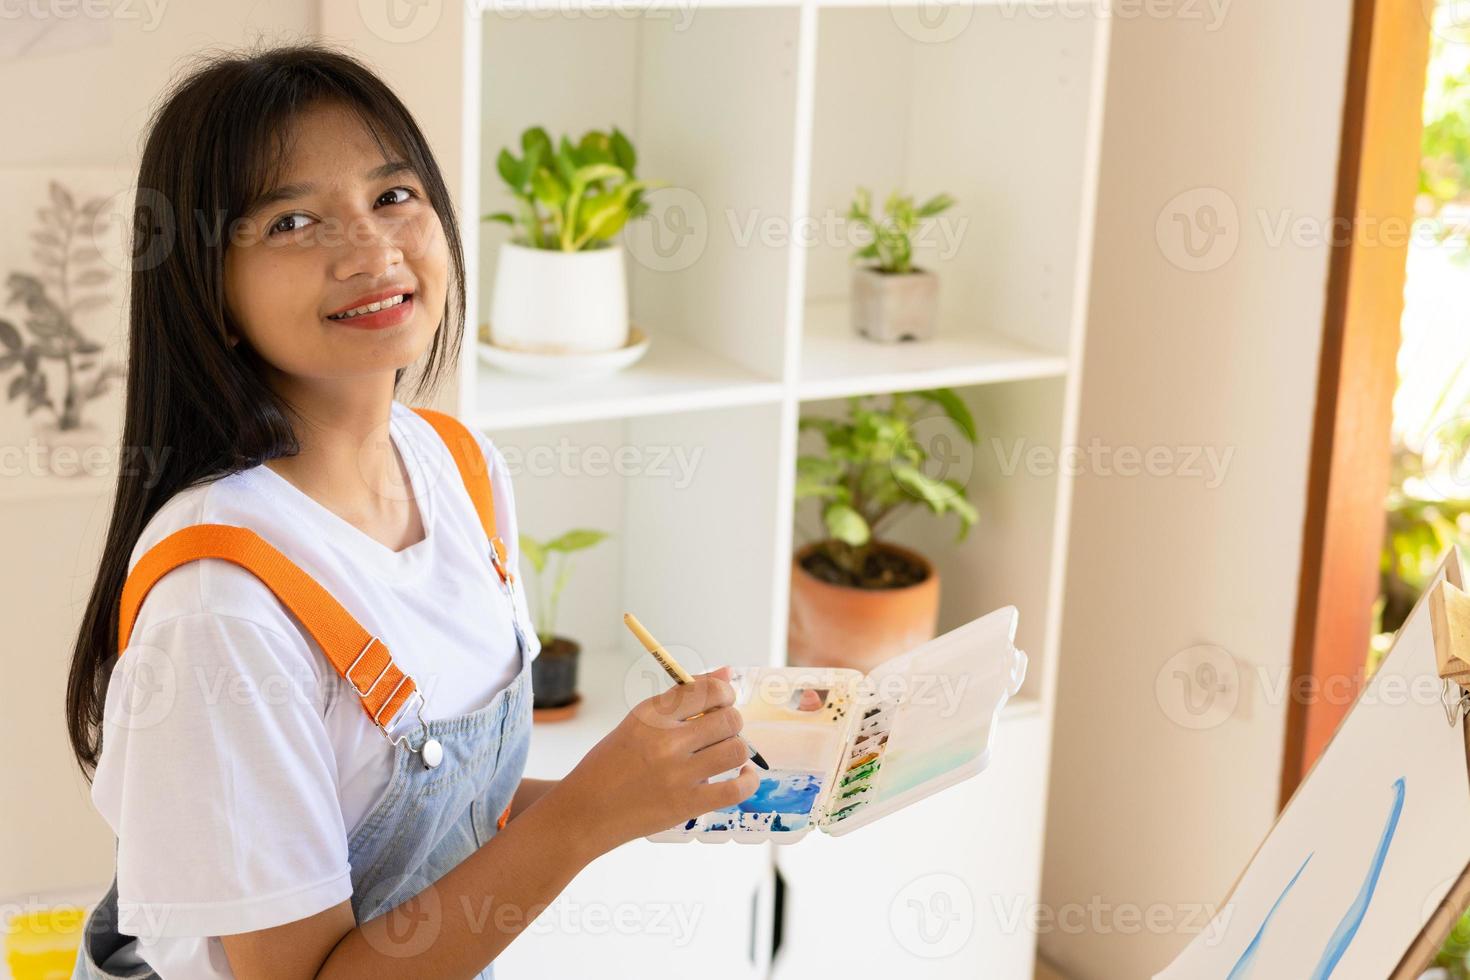 giovane ragazza pittura su carta a casa, legna telaio, hobby e arte studia a casa. foto